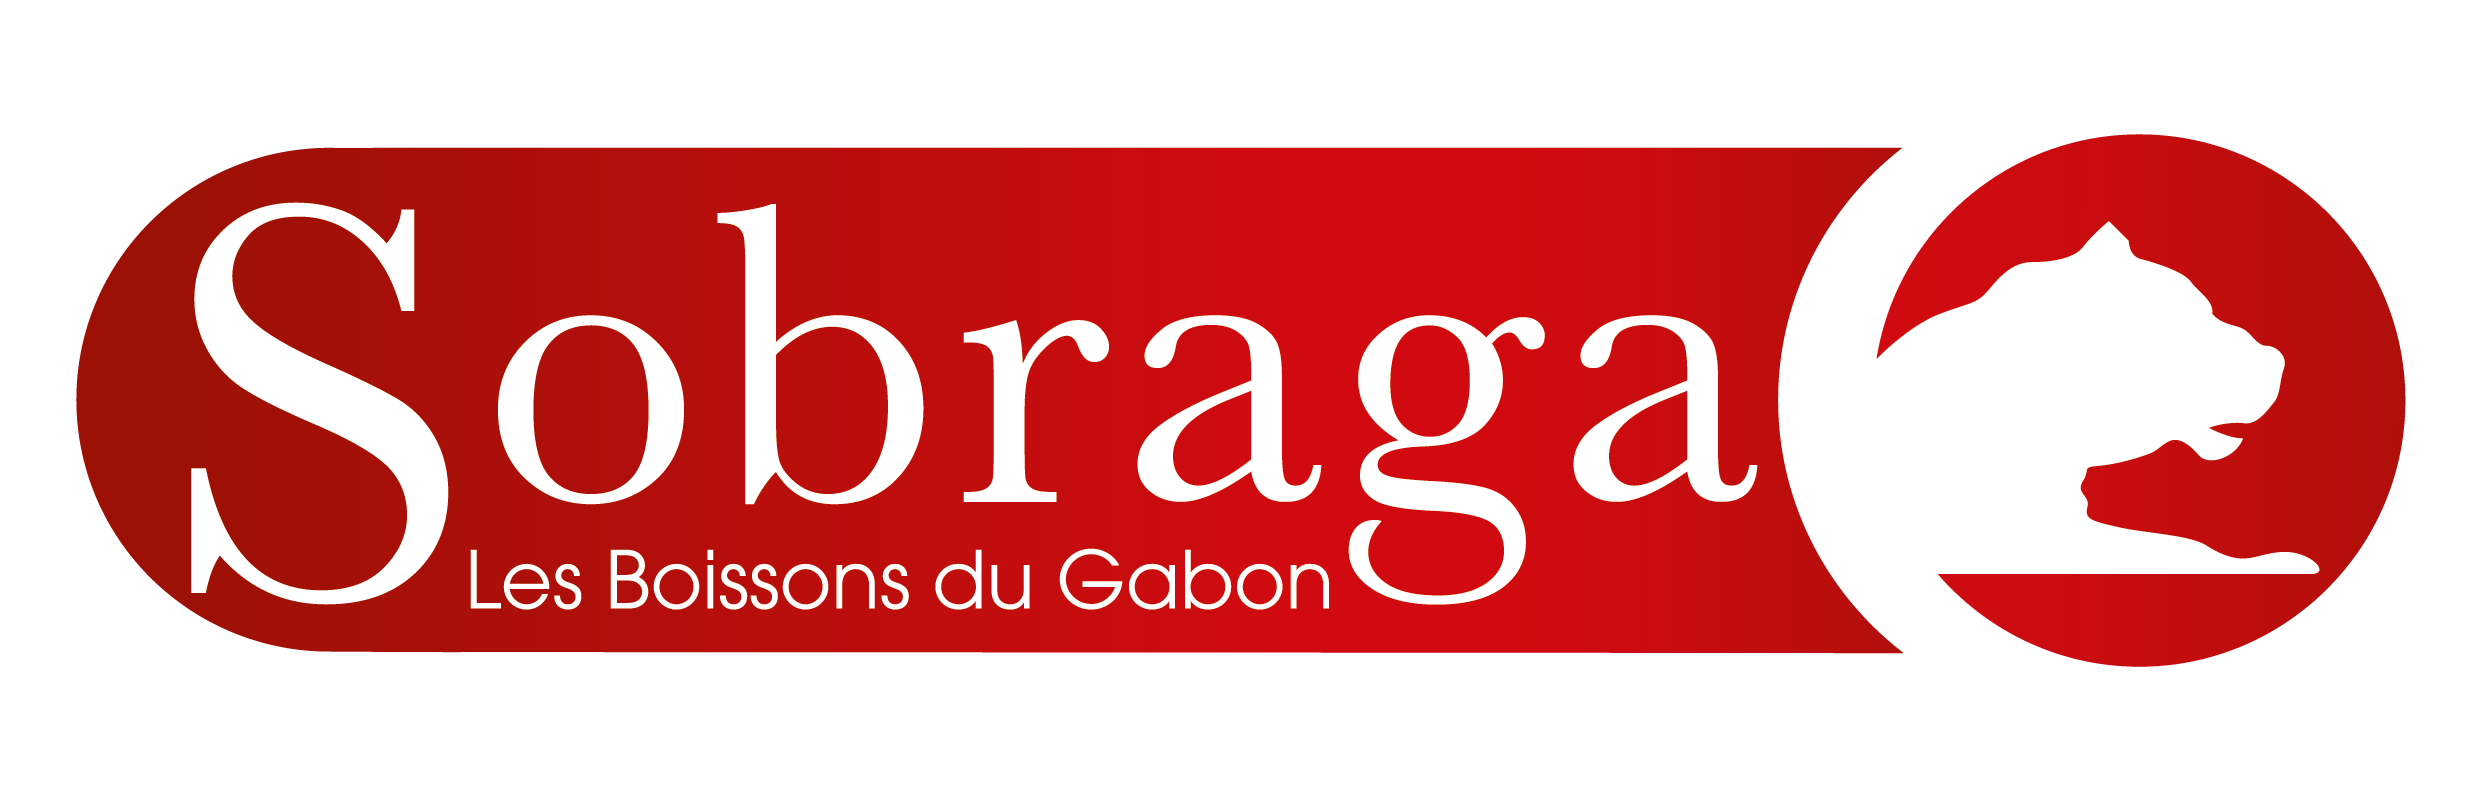 SOBRAGA Les Boissons rafraîchissantes du Gabon